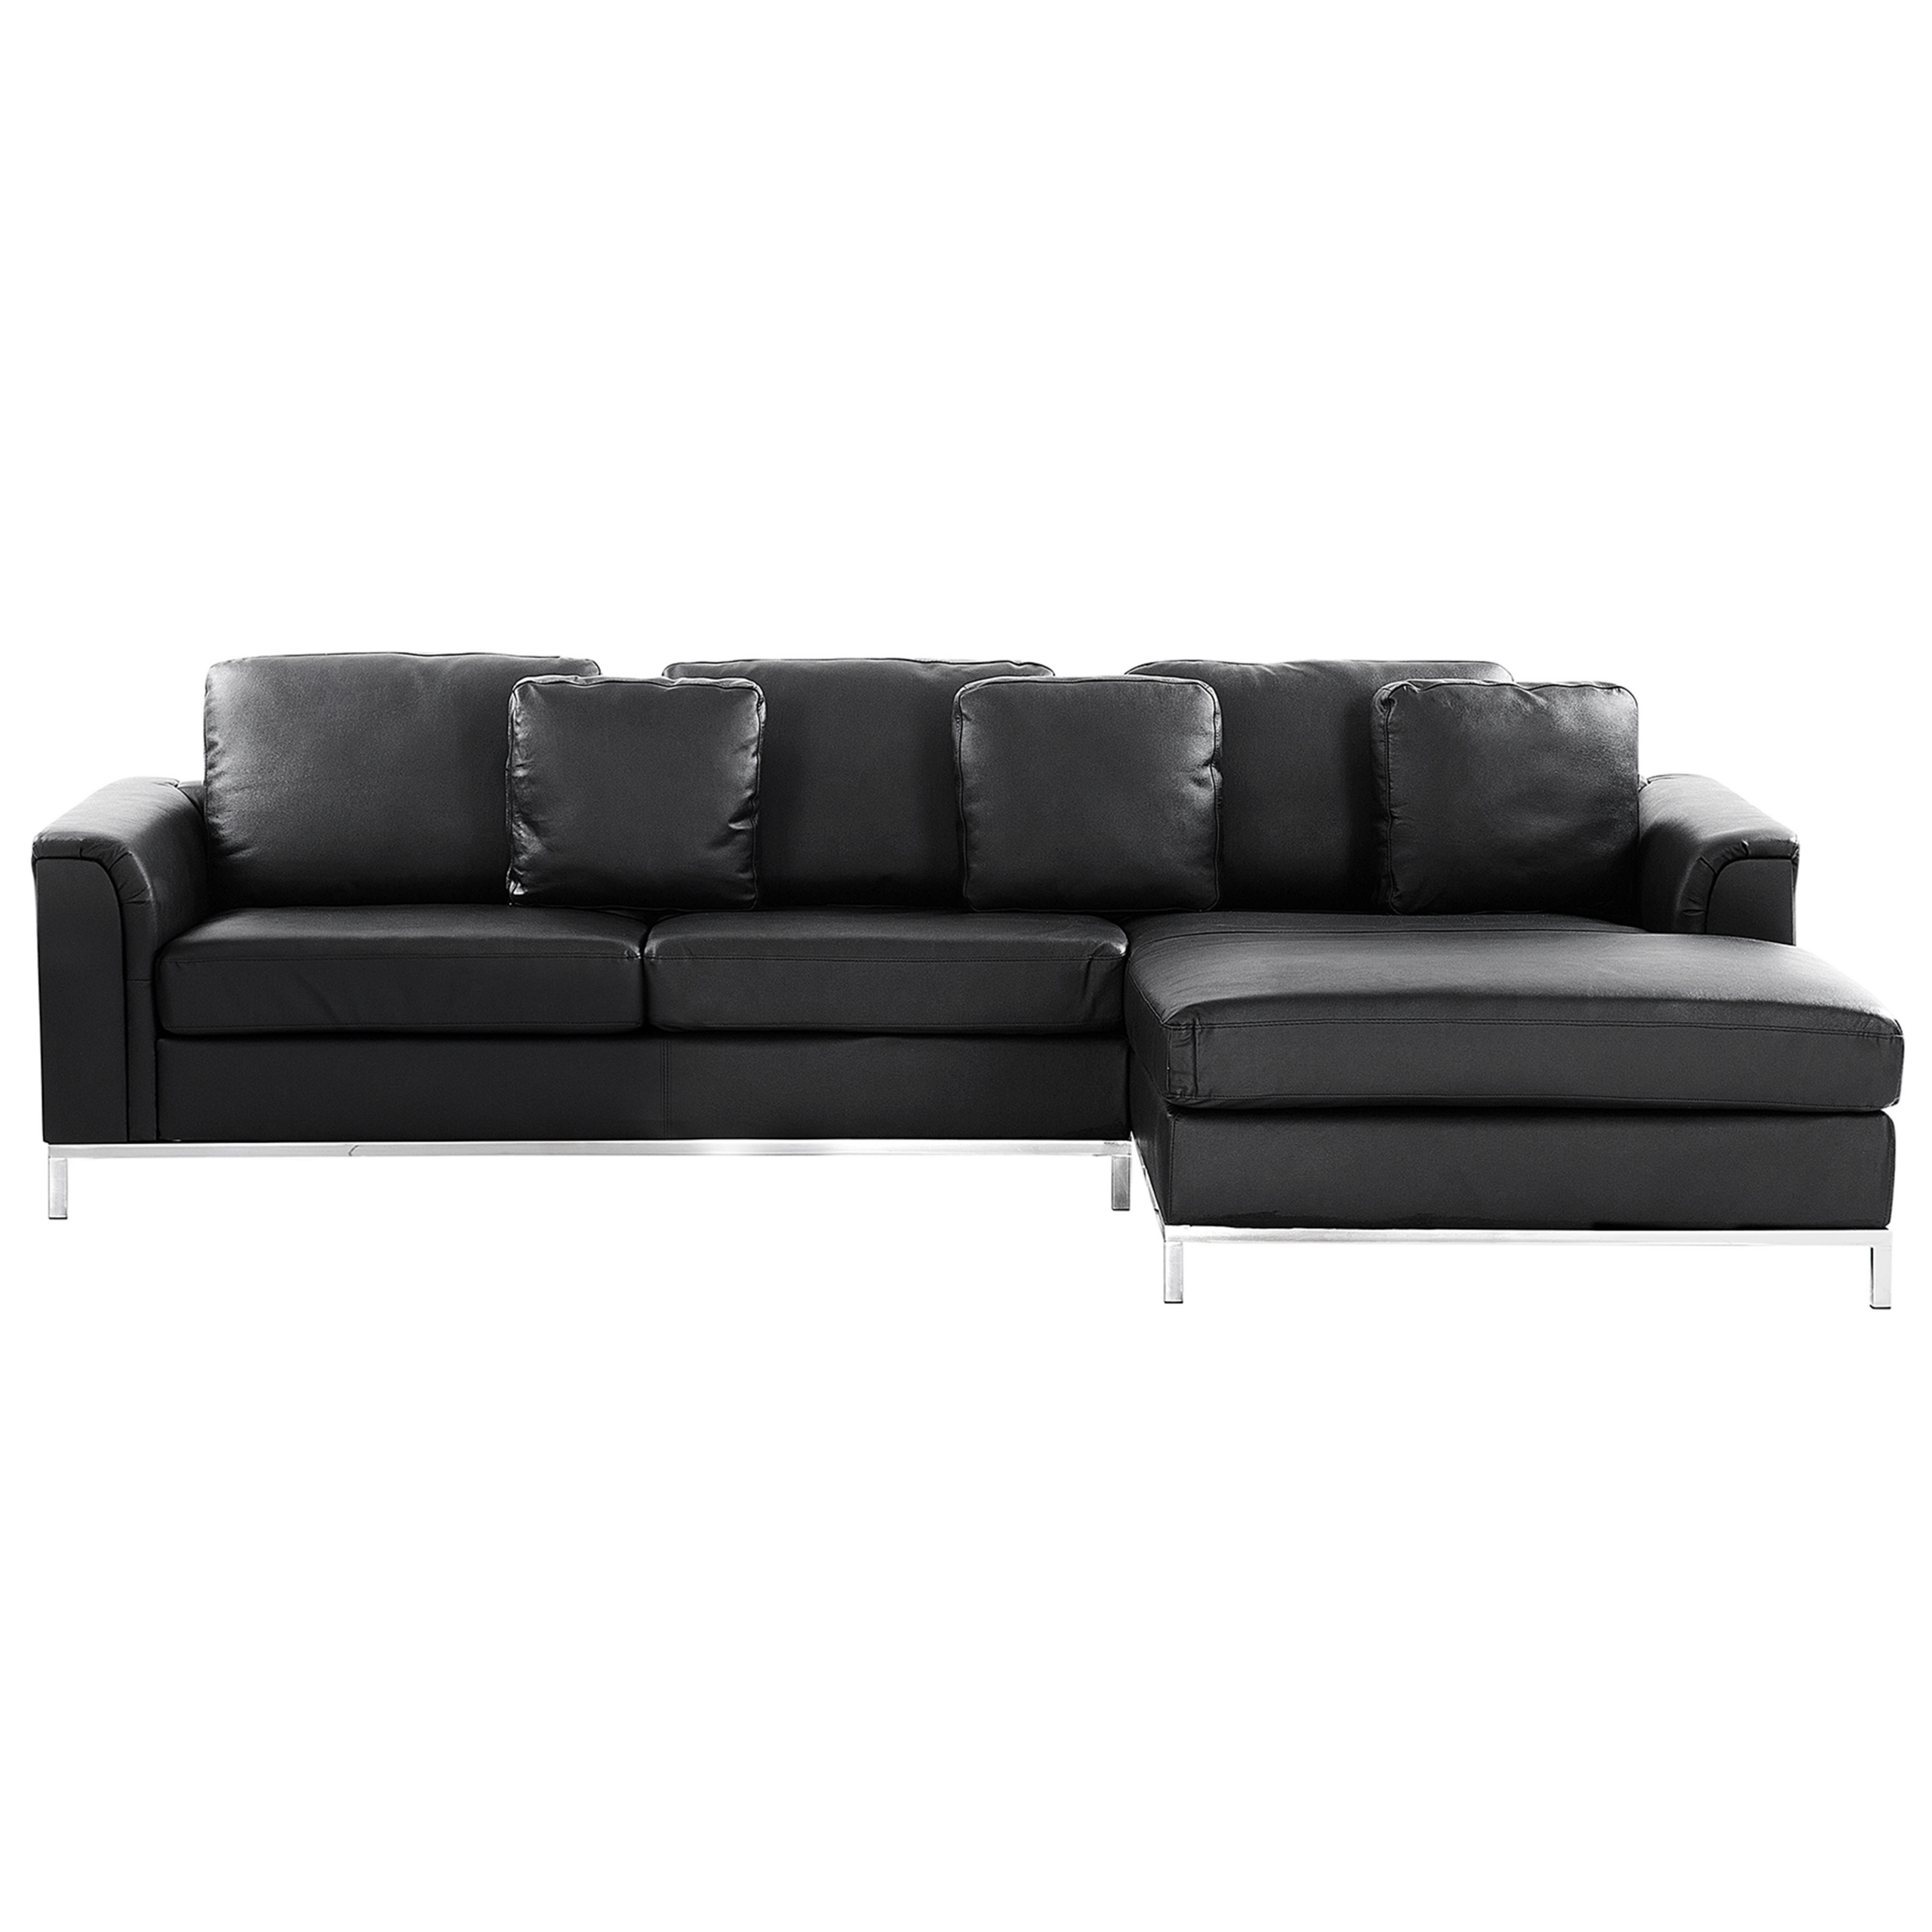 Beliani Corner Sofa Black Leather Upholstered L-shaped Left Hand Orientation